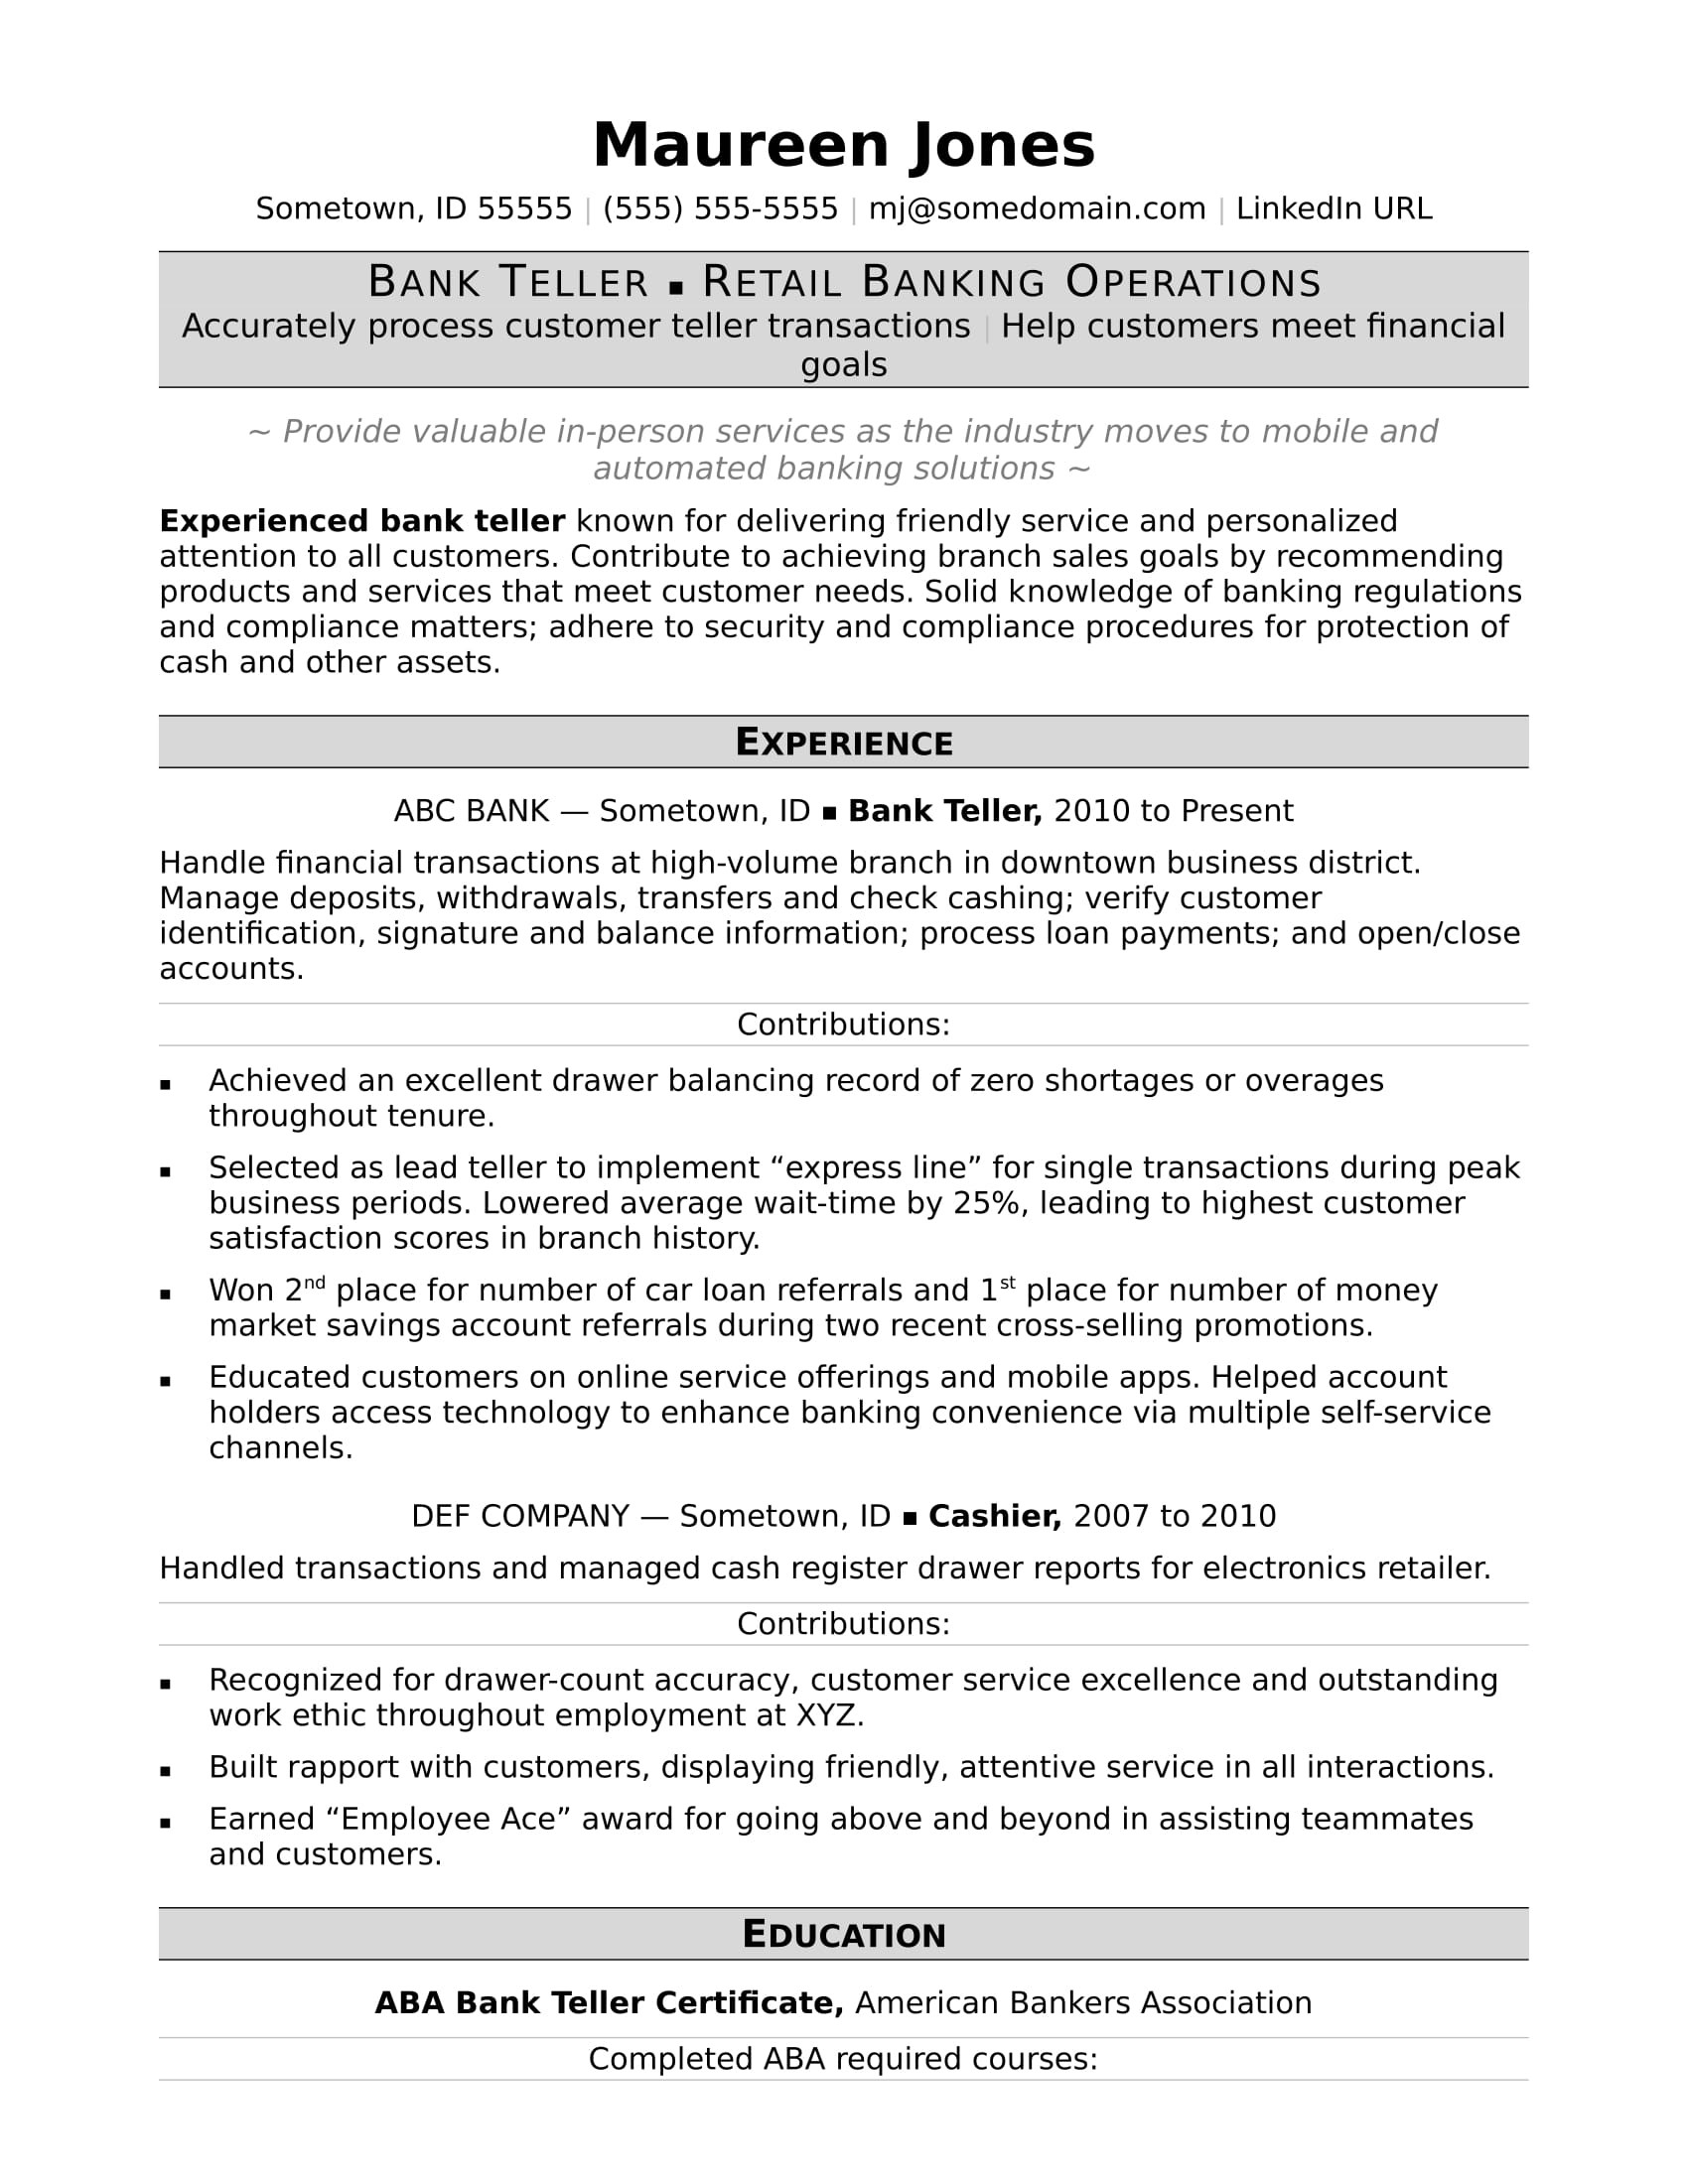 Sample Resume for Bank Clerk with No Experience Bank Teller Resume Monster.com